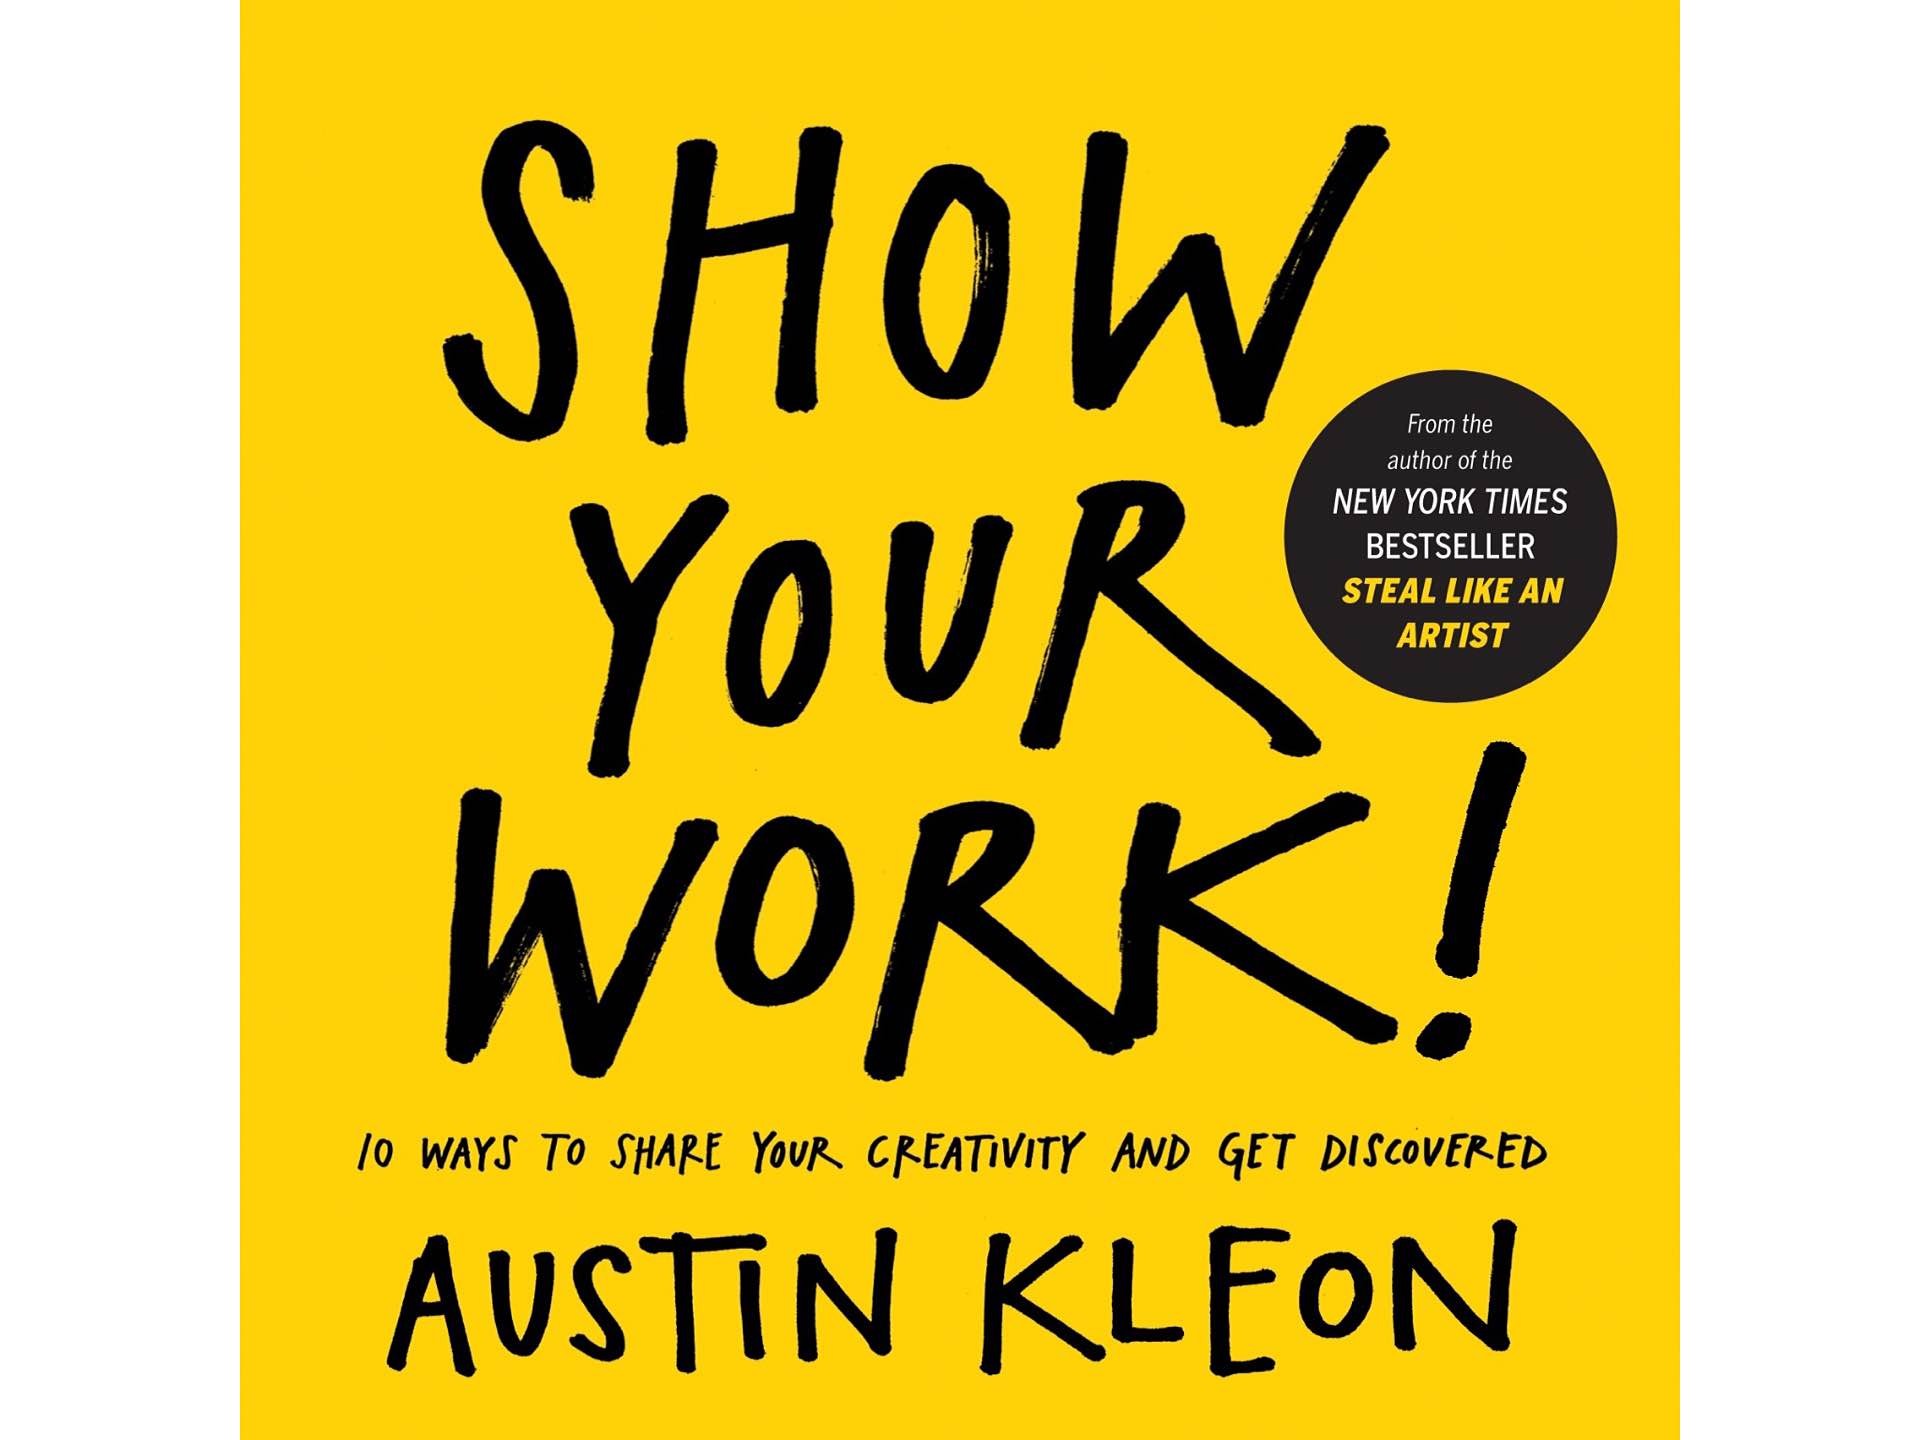 Show Your Work by Austin Kleon.